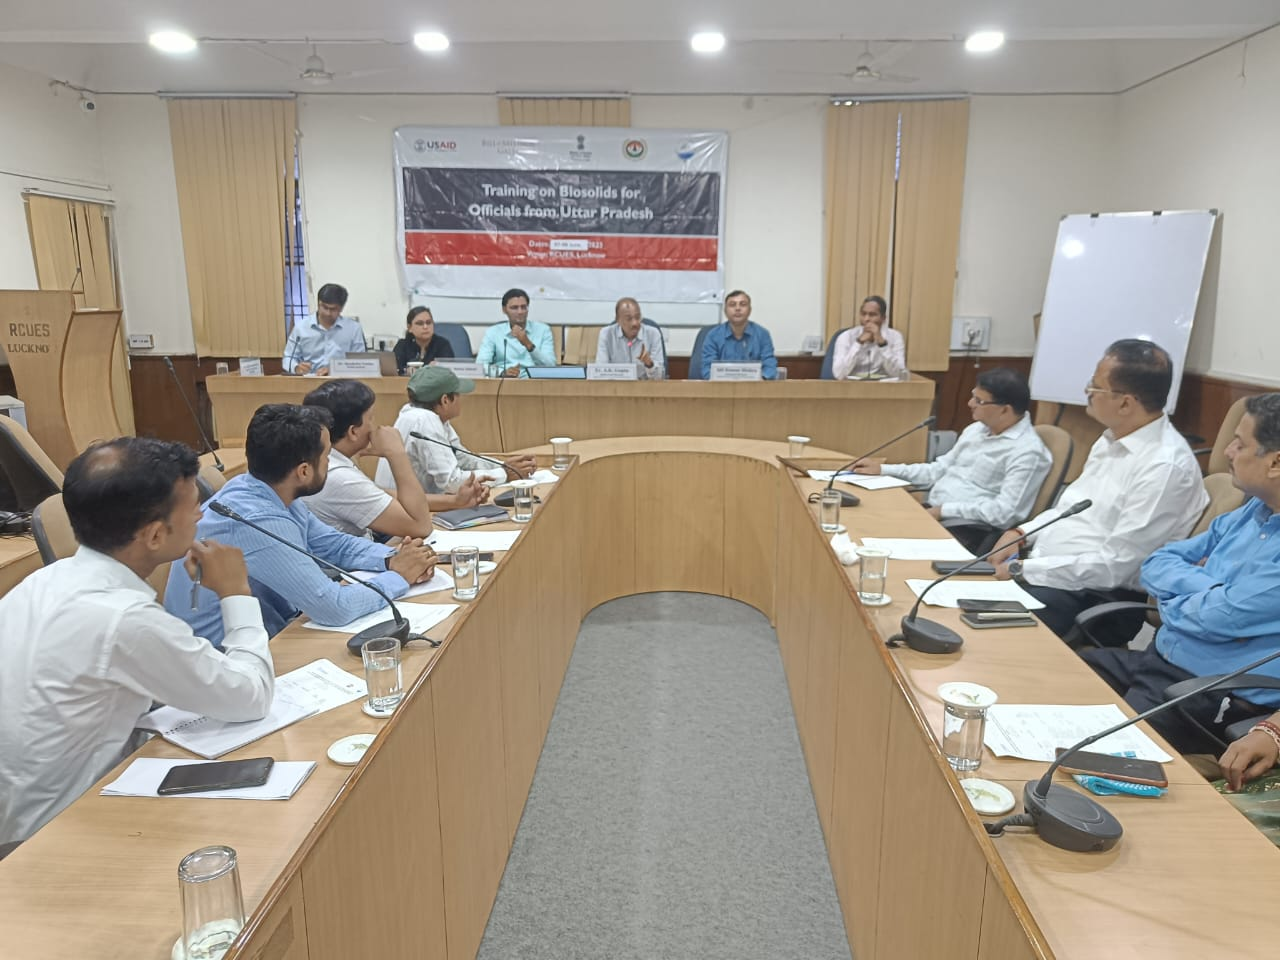 Advanced training on Biosolids for Government officials, Uttar Pradesh – Batch 2 